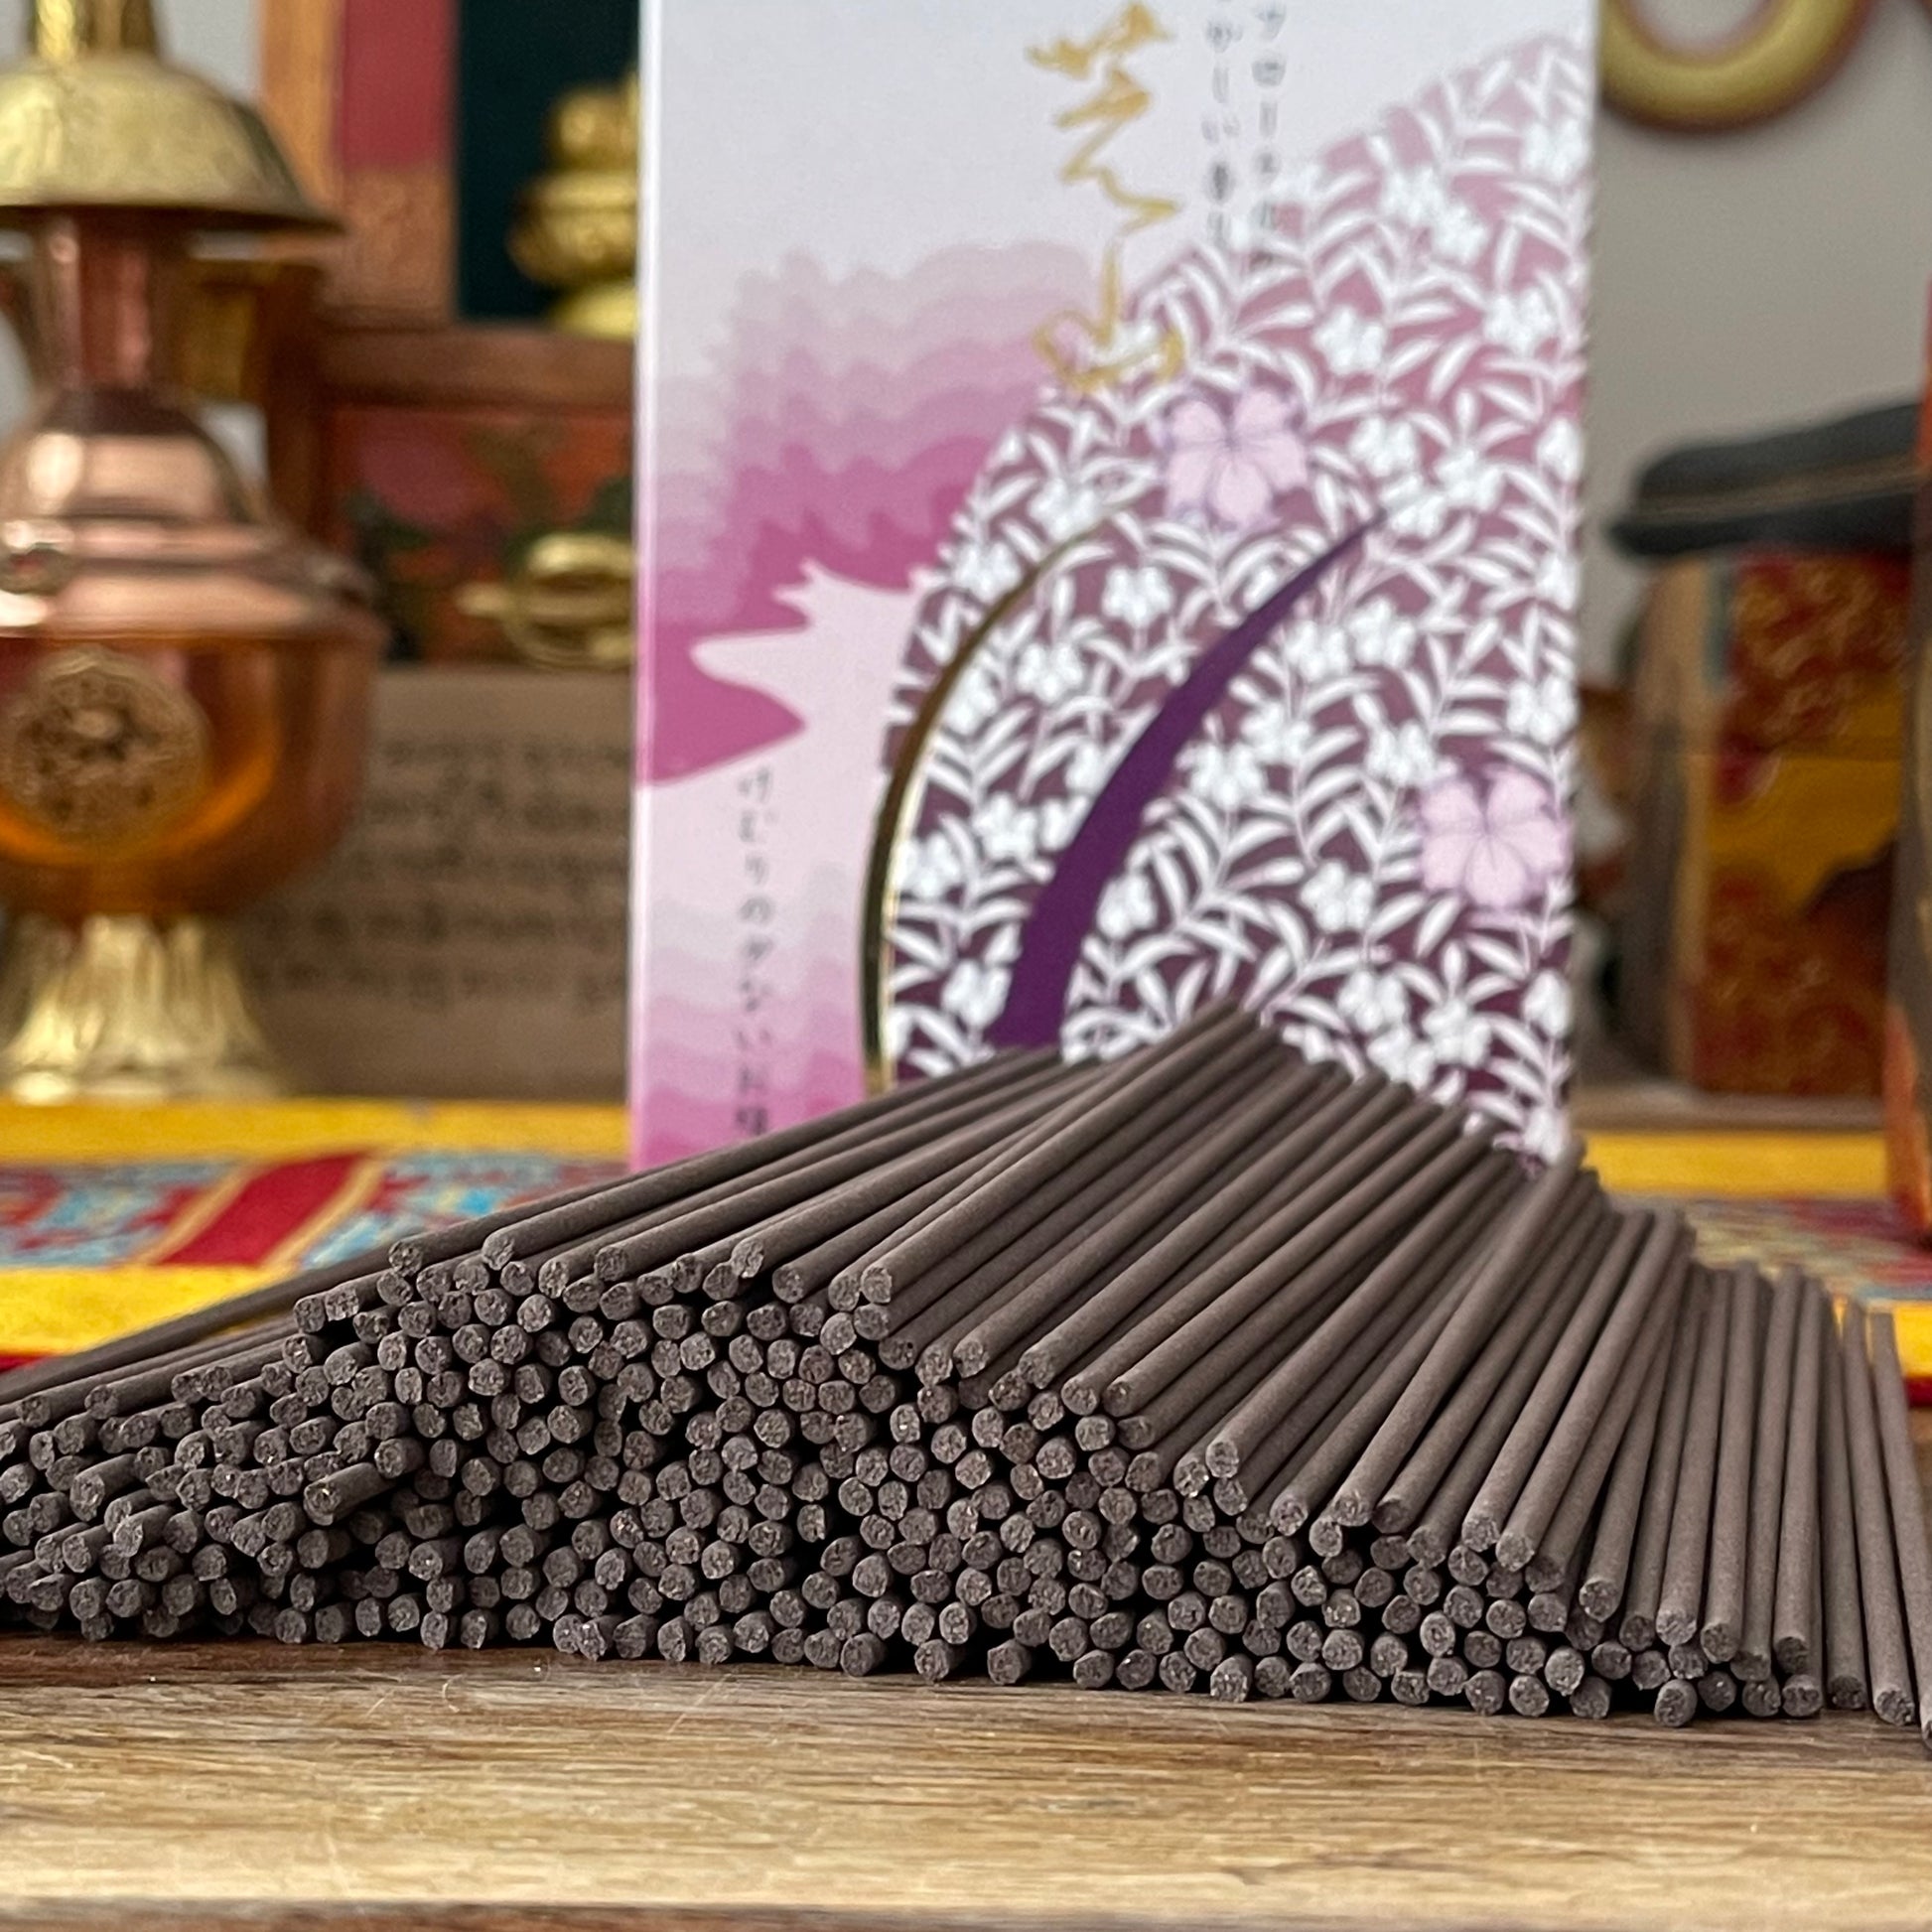 Meikoh Shibayama Incense | High quality Japanese Incense sticks